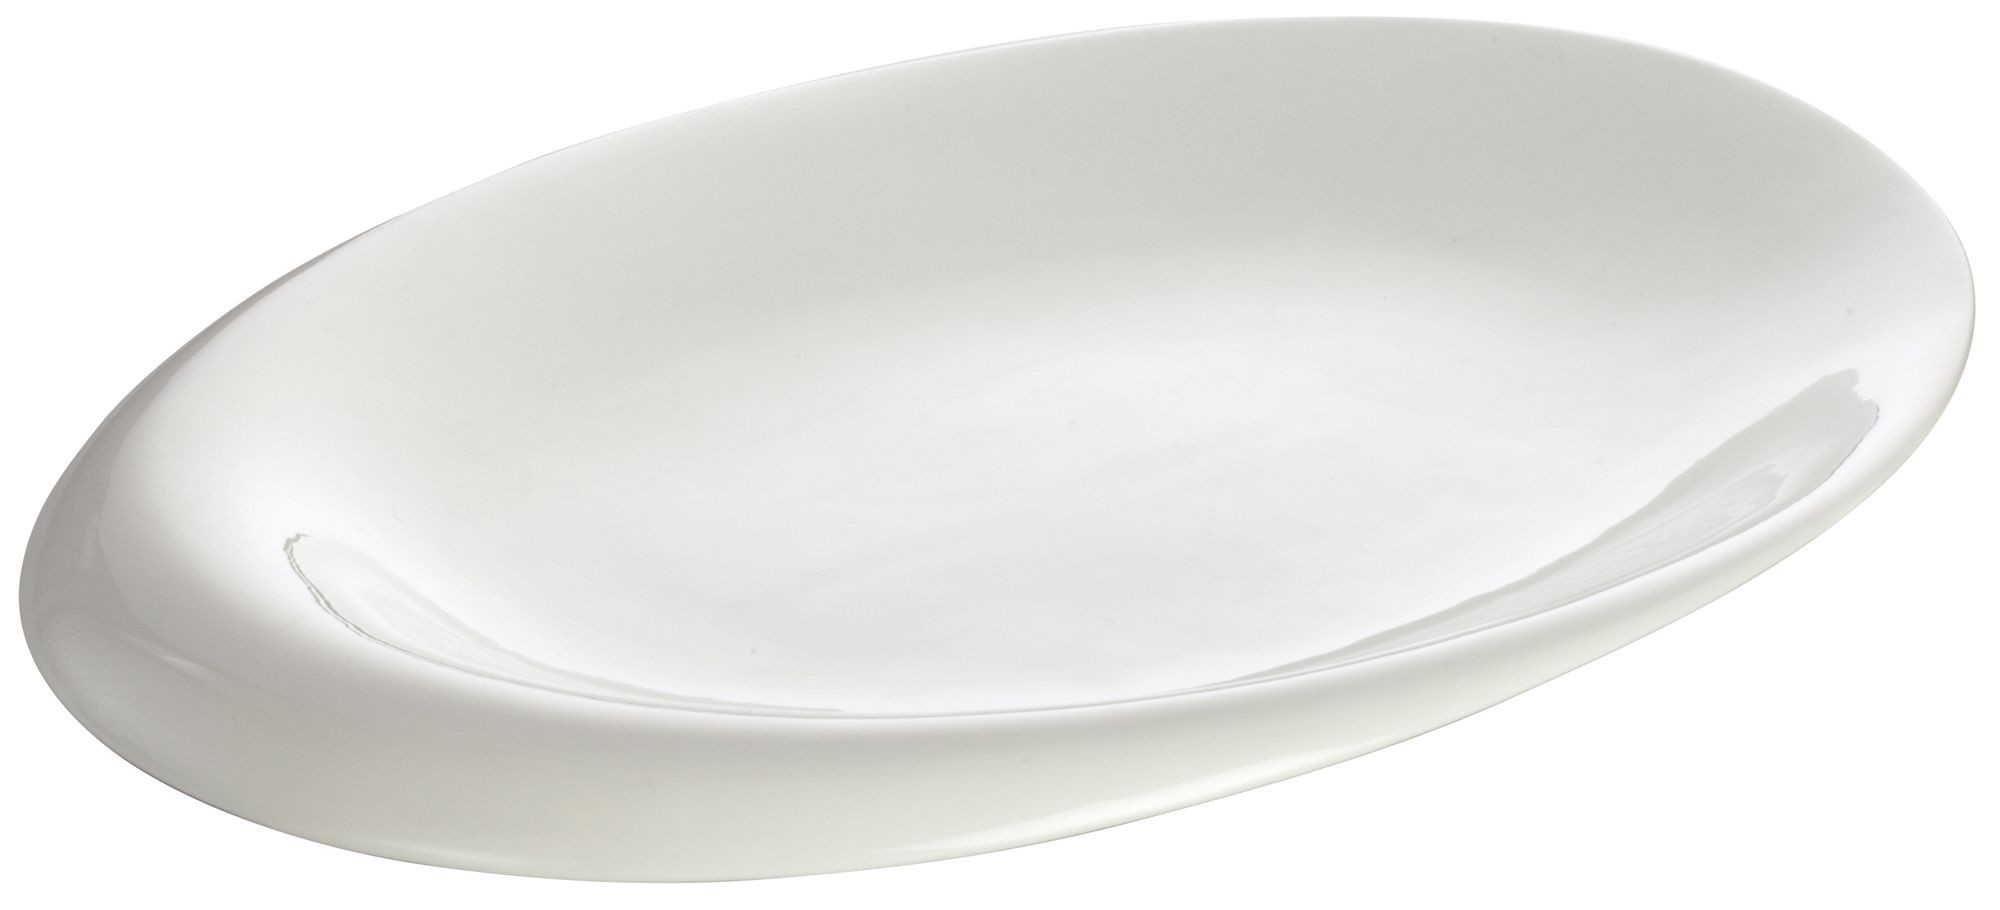 Winco WDP004-210 Ocea Creamy White Porcelain Oval Bowl 12" x 9-1/8"